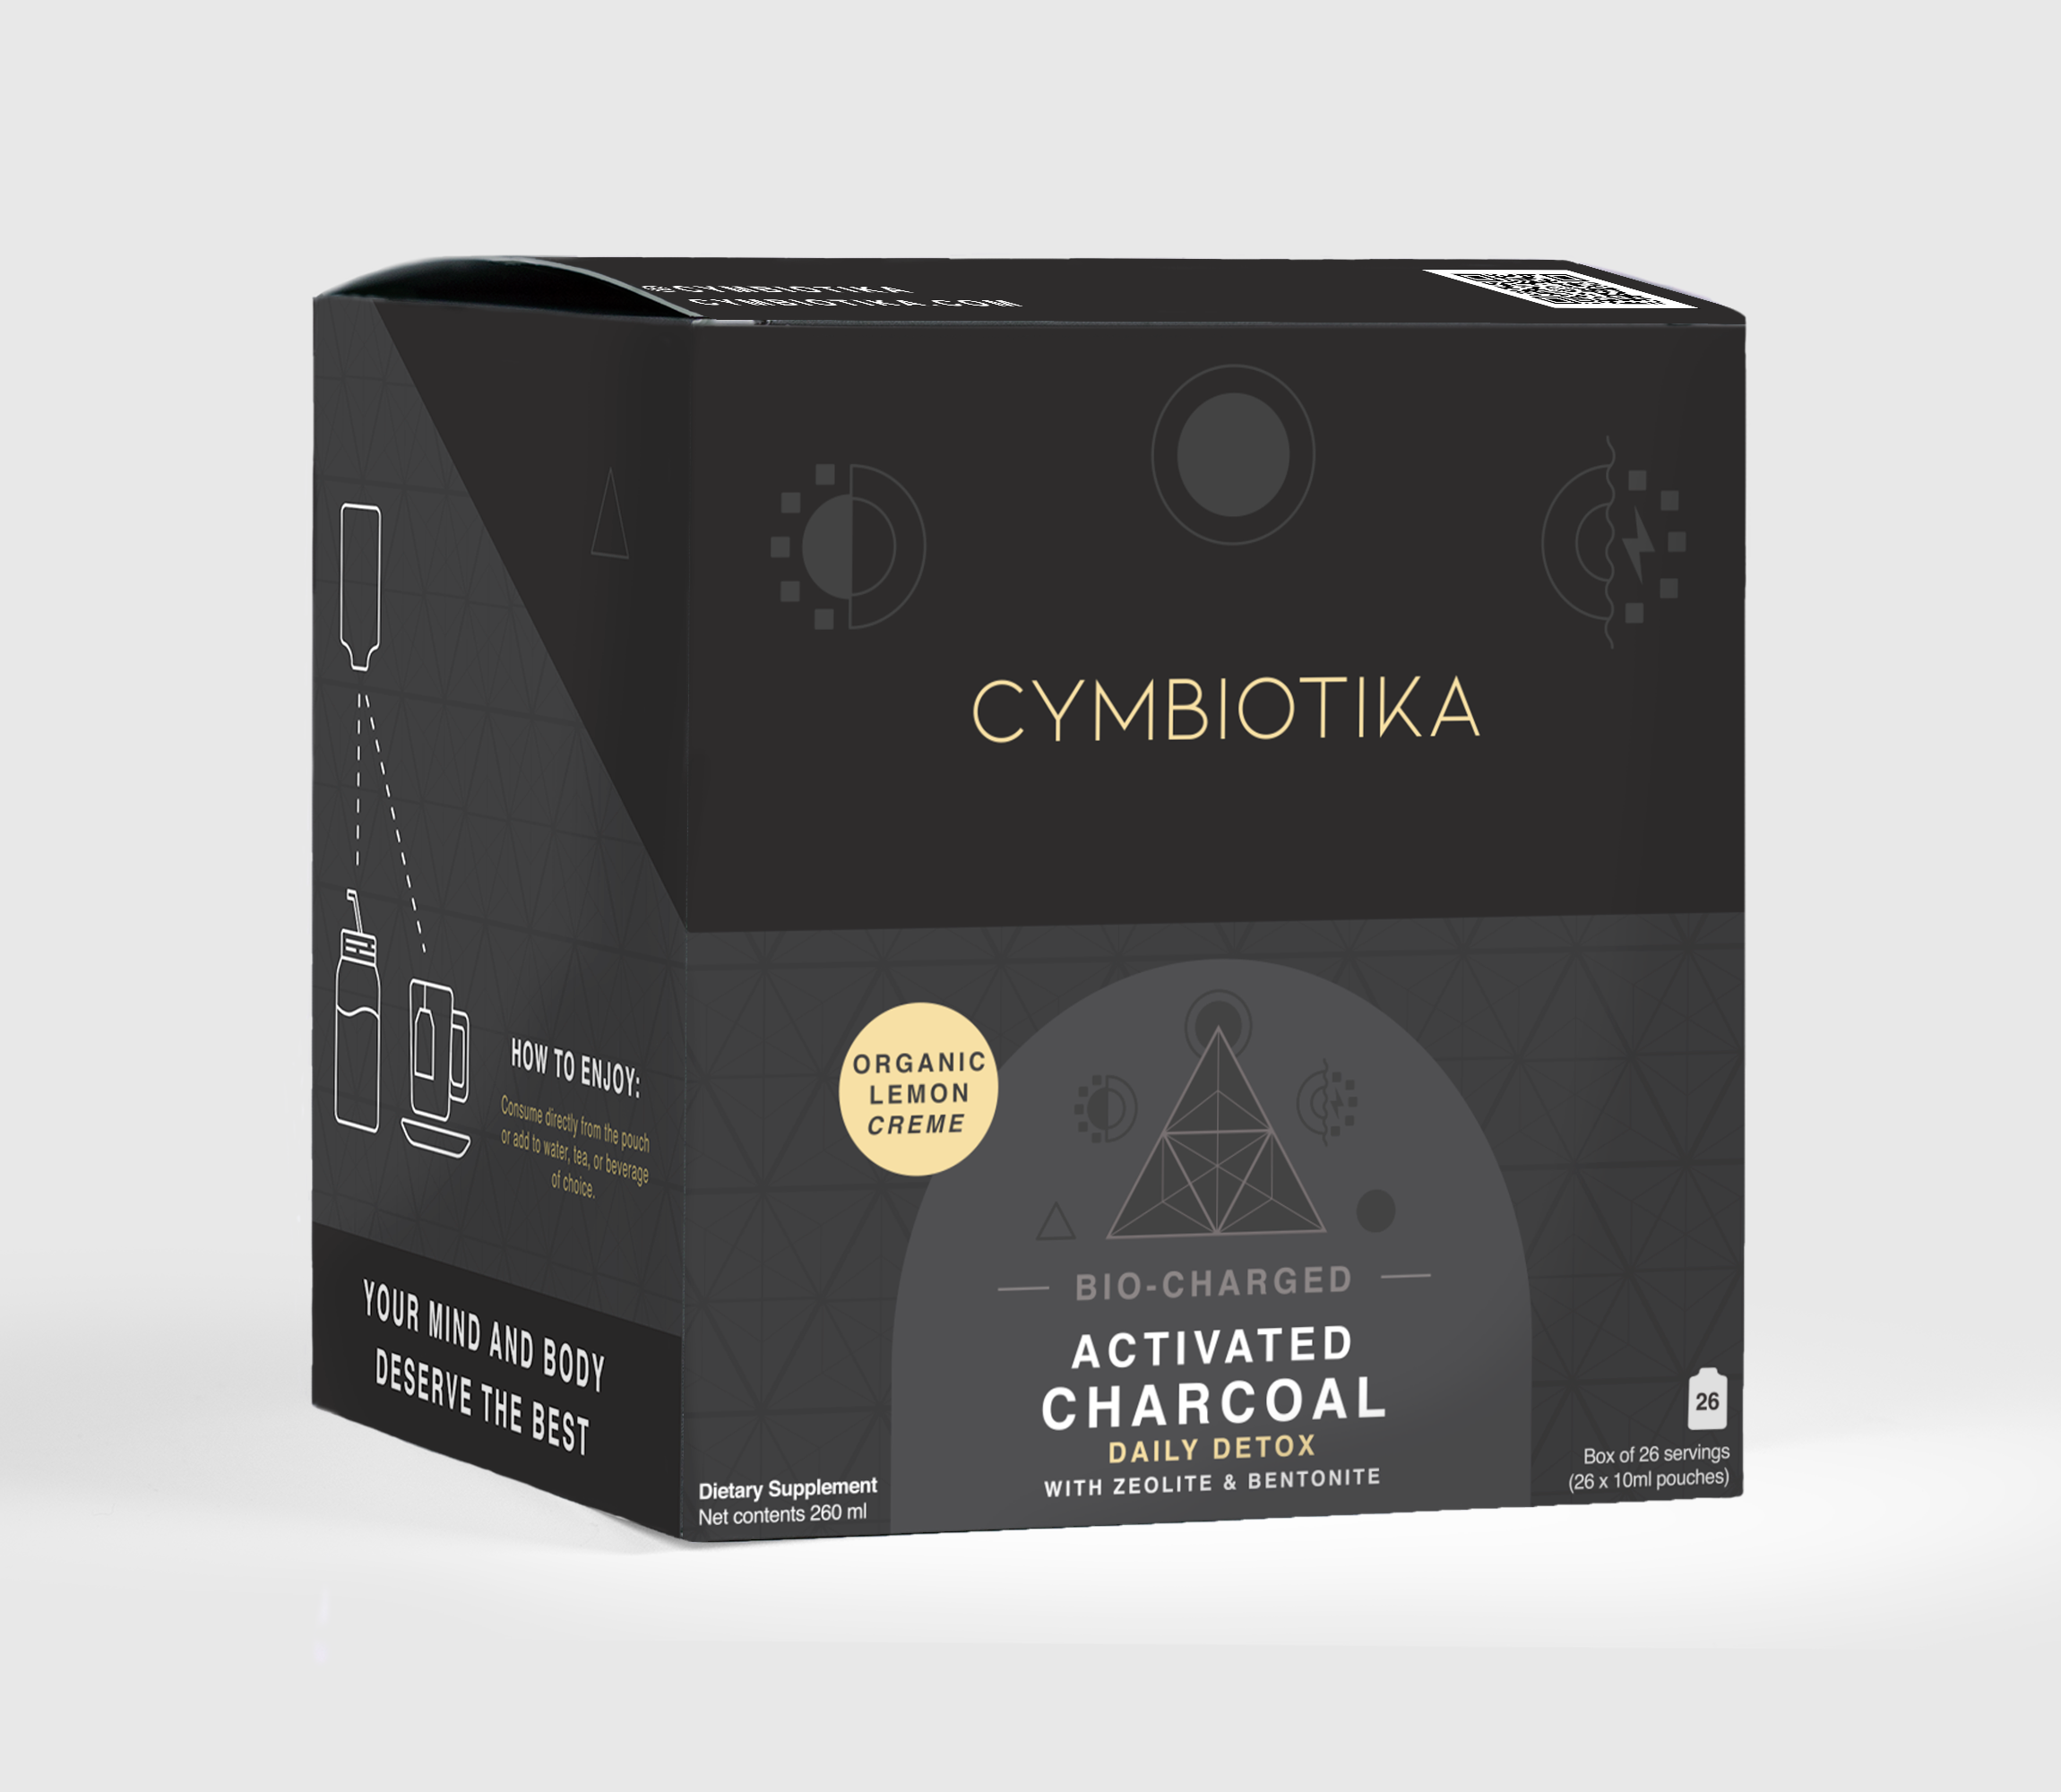 Cymbiotika Activated Charcoal